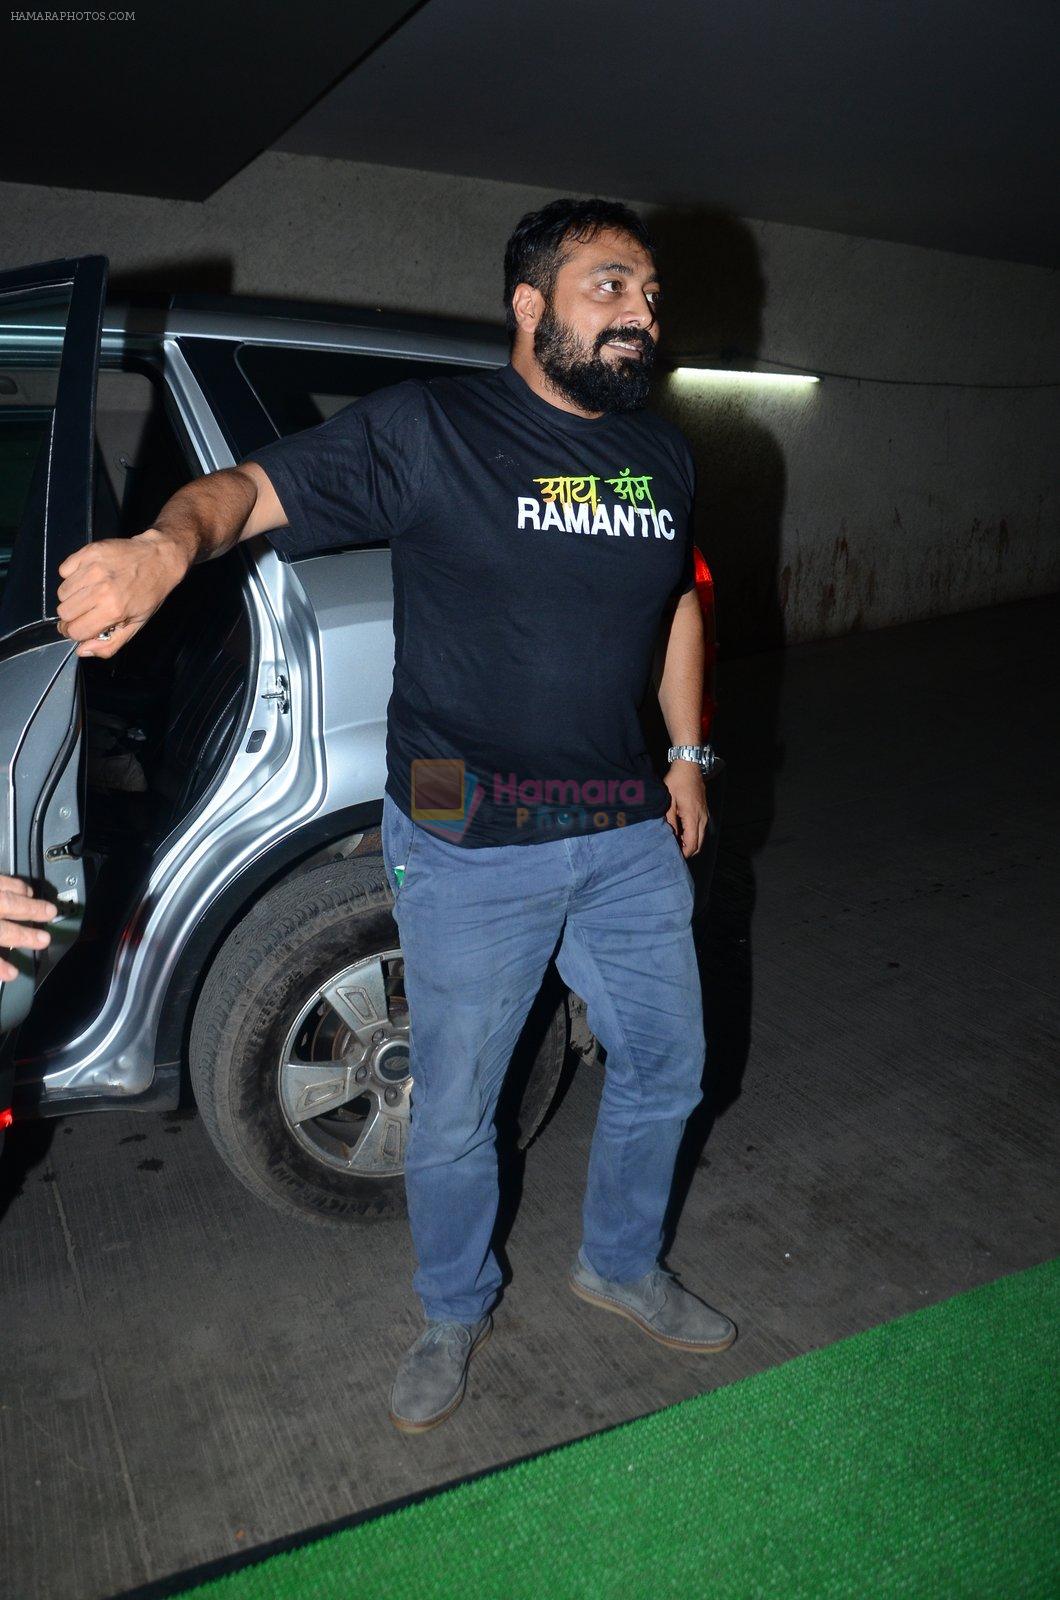 Anurag Kashyap during the special screening of film Raman Raghav 2.0 in Mumbai, India on June 22, 2015